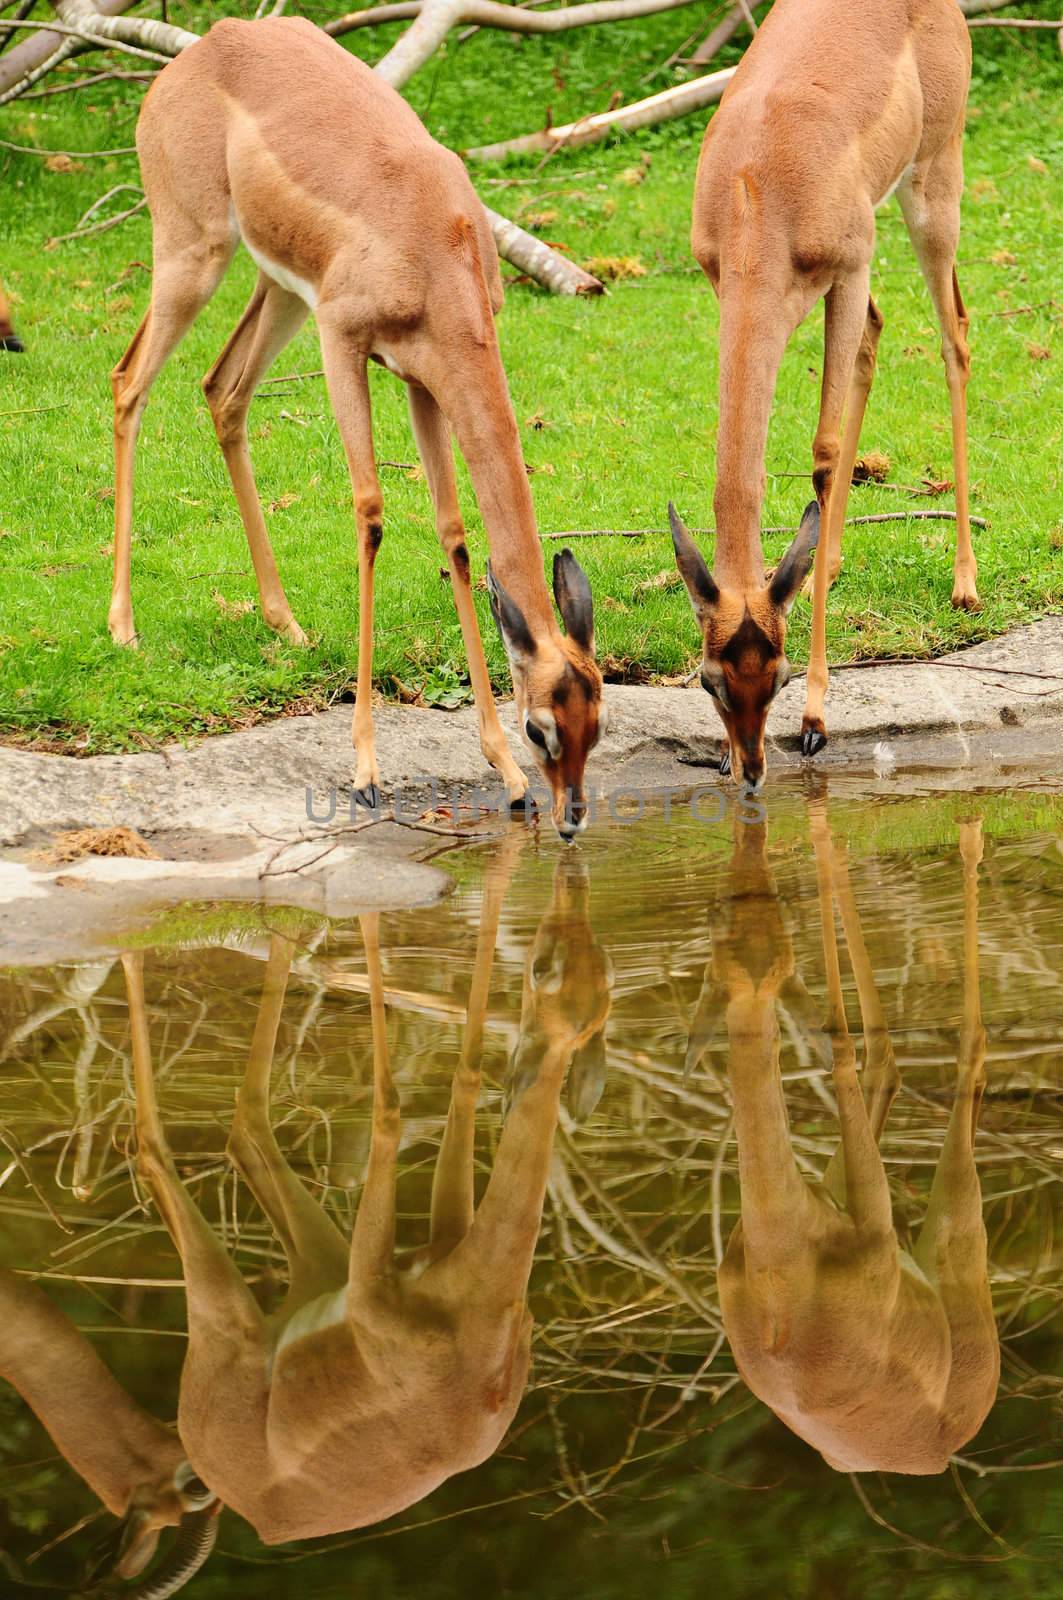 Wild deers drinking water in harmony at the waterhole